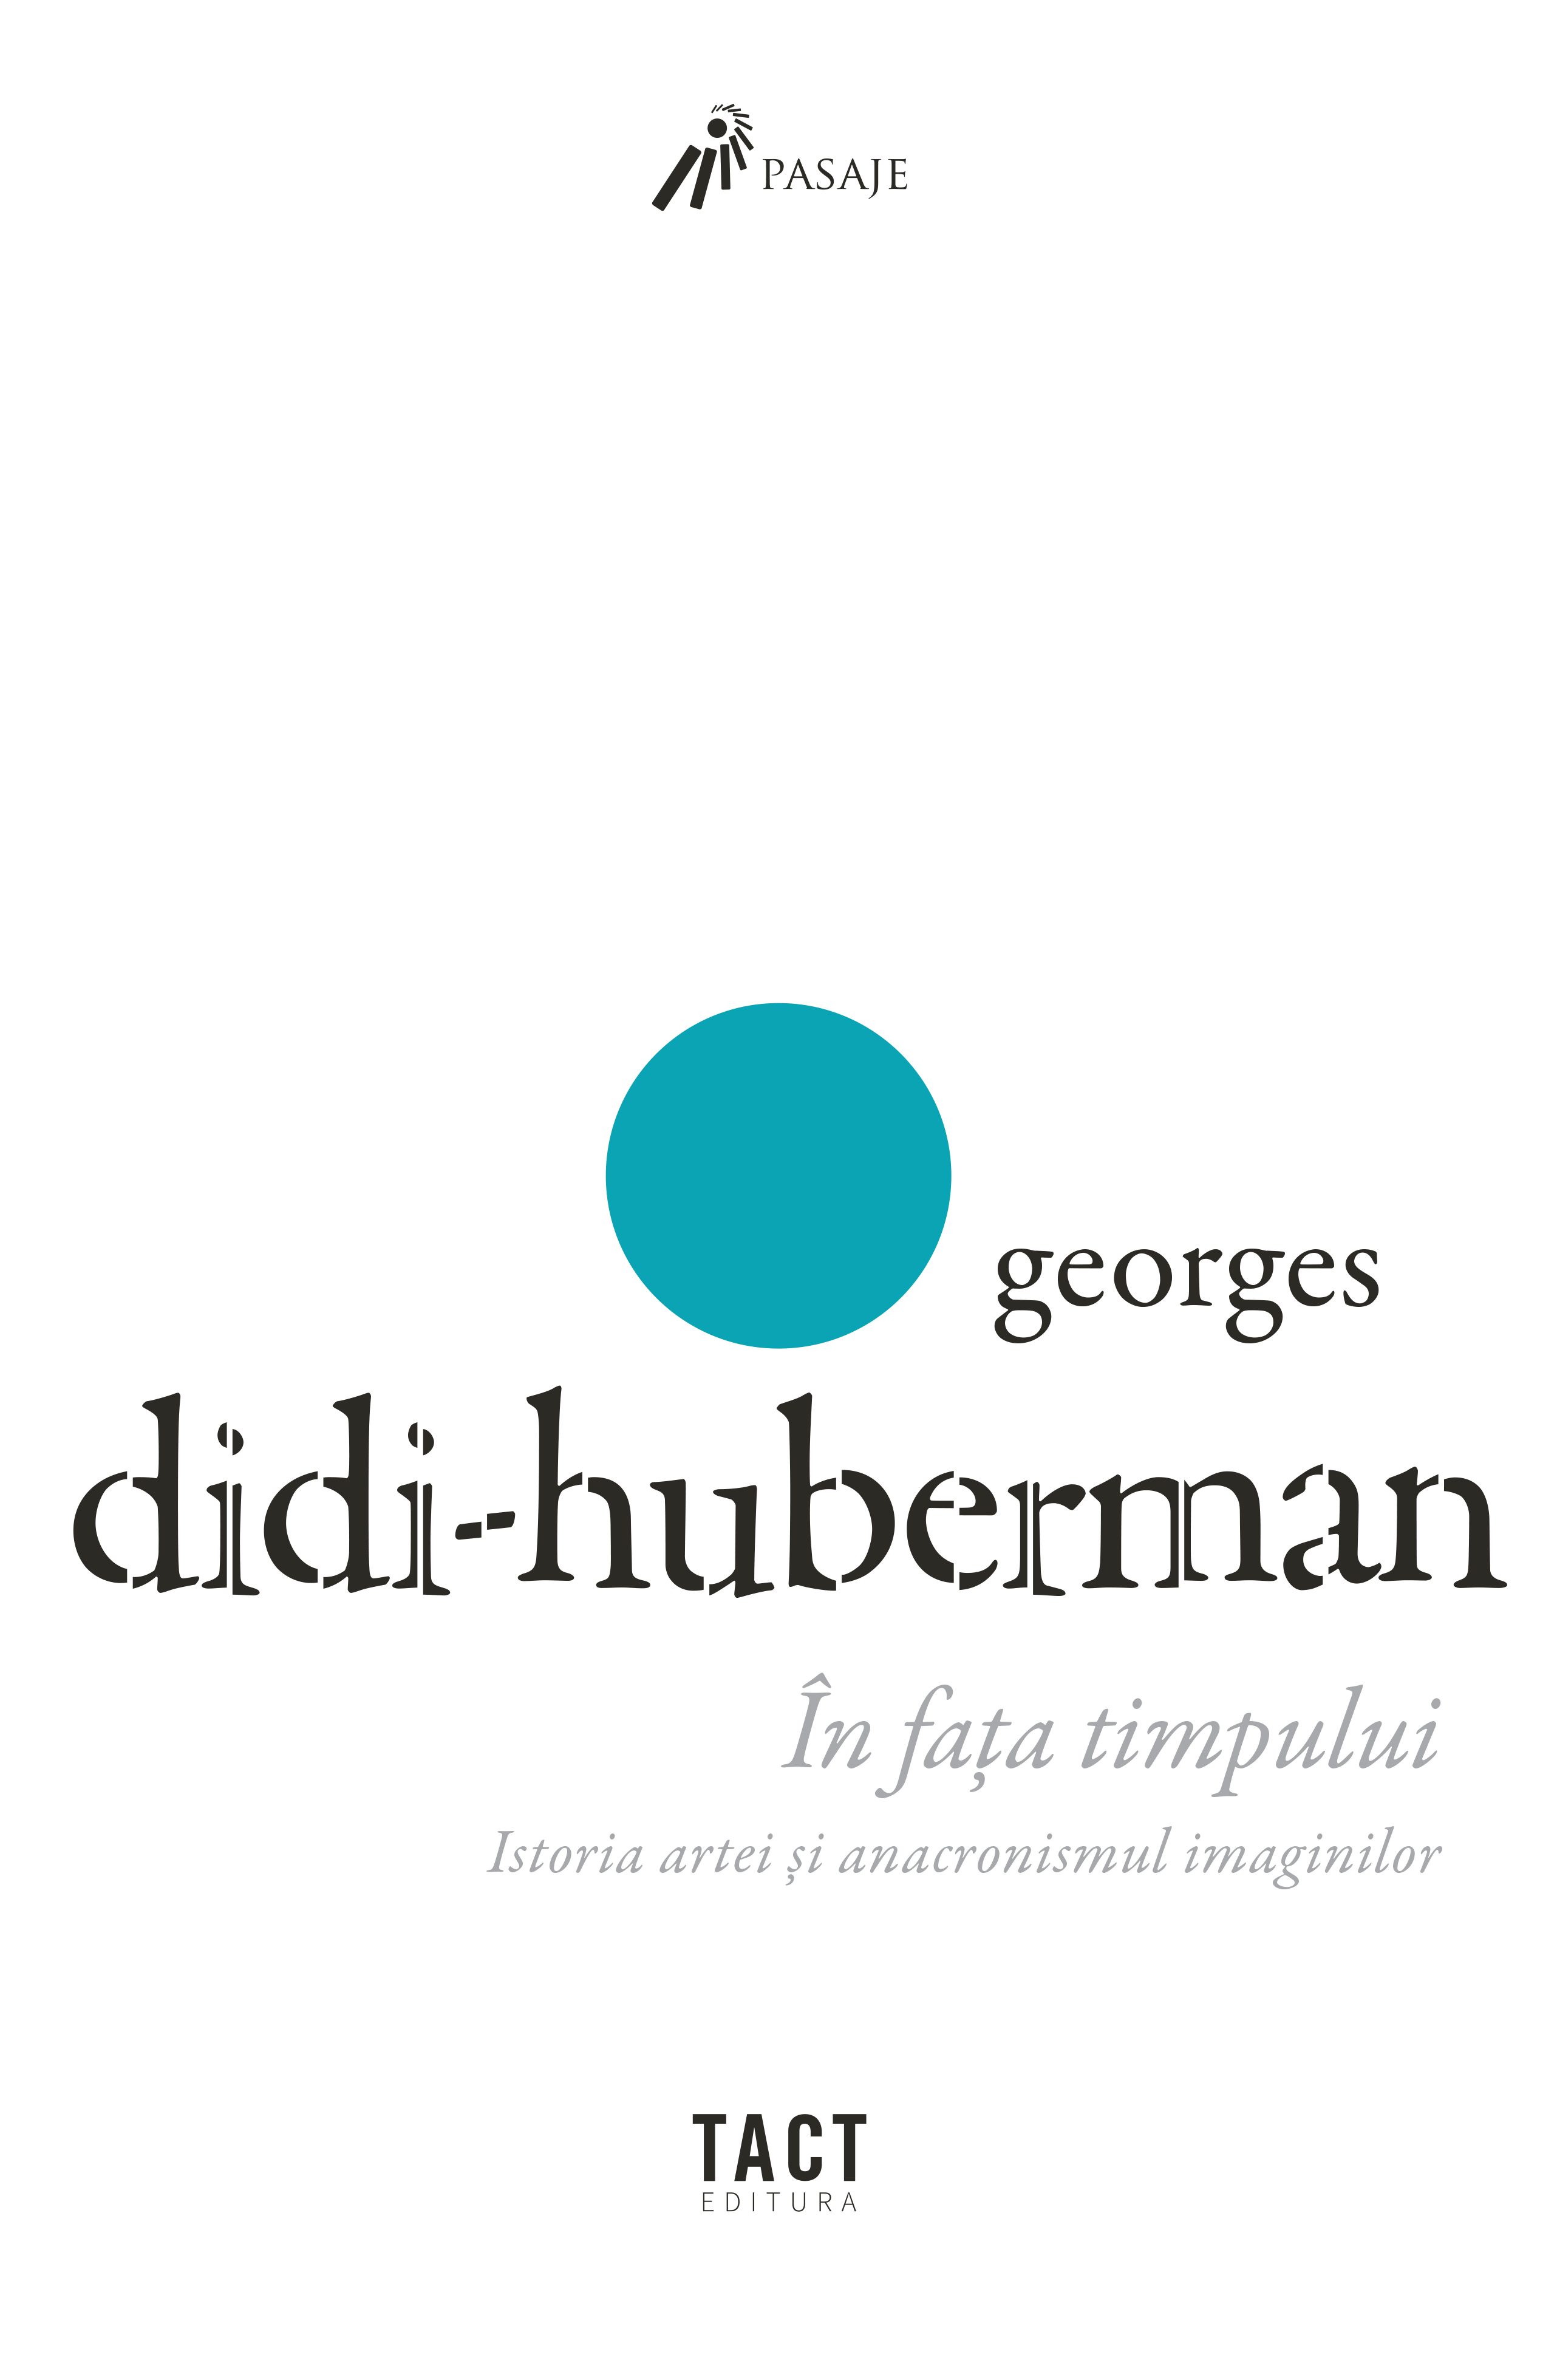 In fata timpului | Didi-Huberman-Georges carturesti.ro Arta, arhitectura